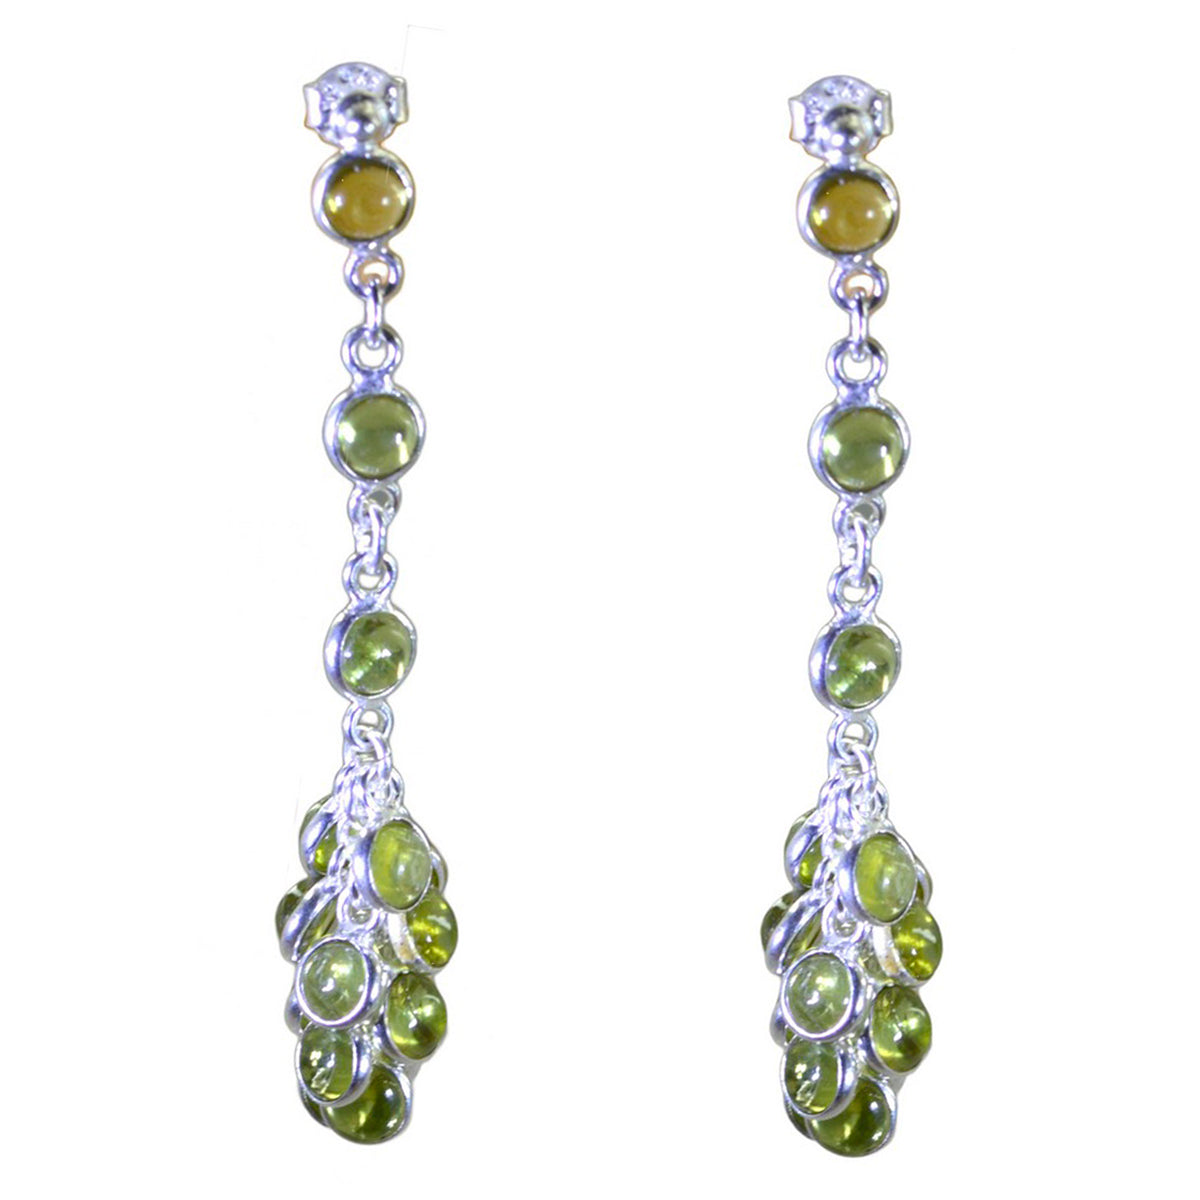 Riyo Real Gemstones round Cabochon Green Peridot Silver Earrings cyber Monday gift